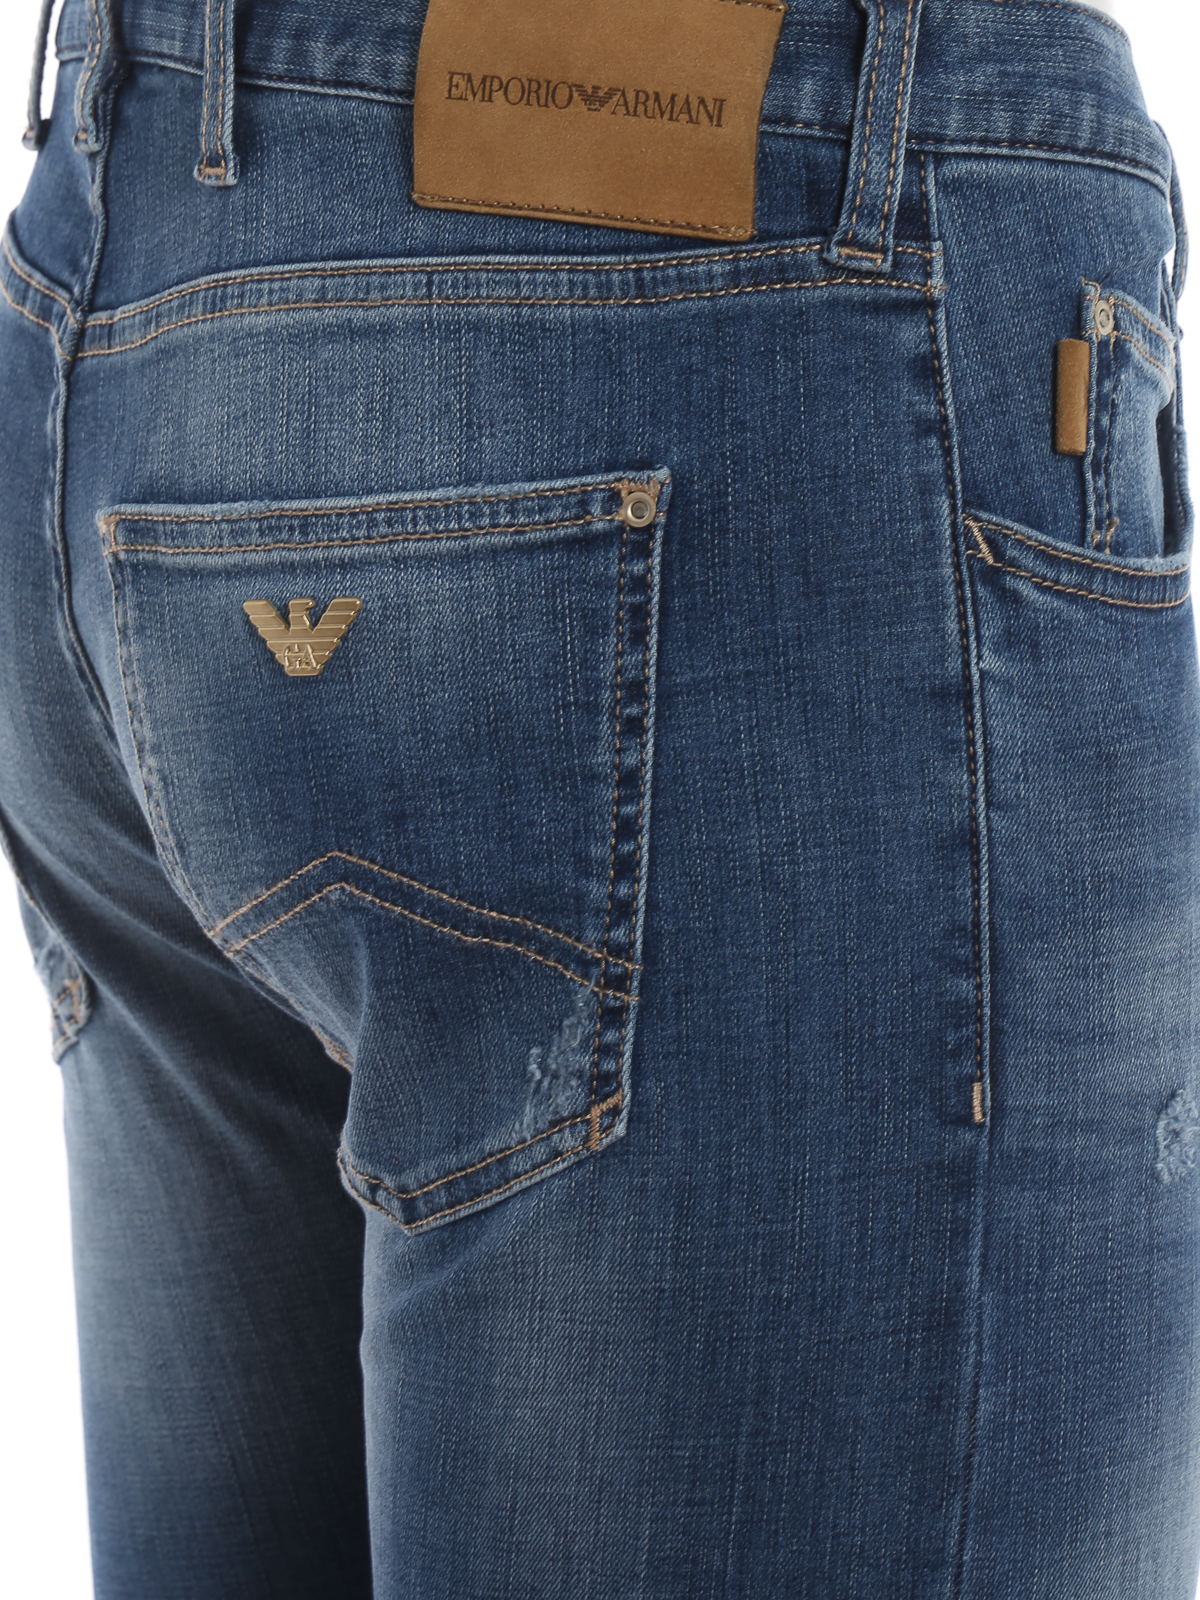 lamp Verward Schelden Skinny jeans Emporio Armani - J10 faded extra slim fit jeans -  3G1J101D5MZ0941